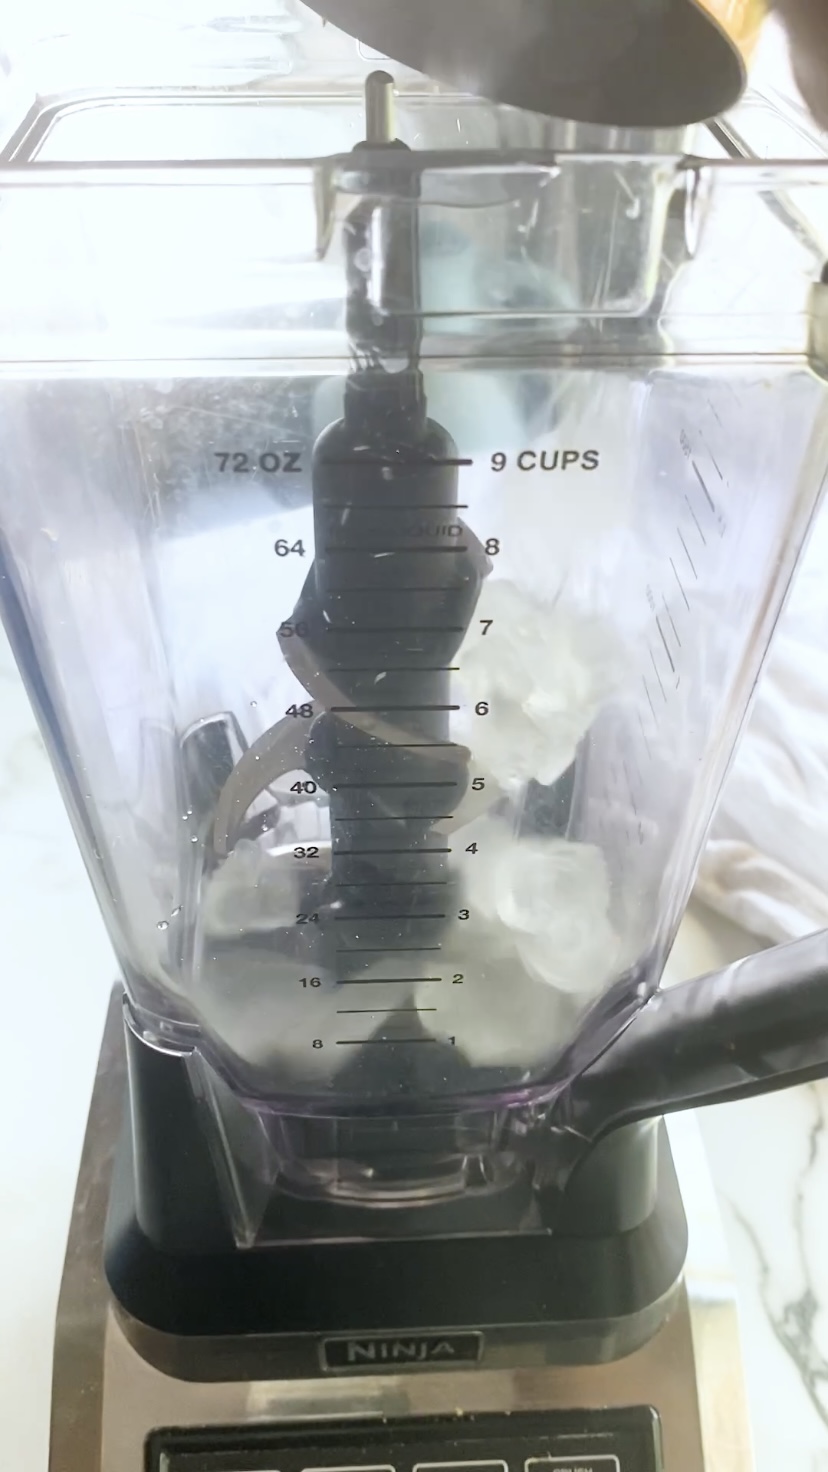 Ice in a blender jug.